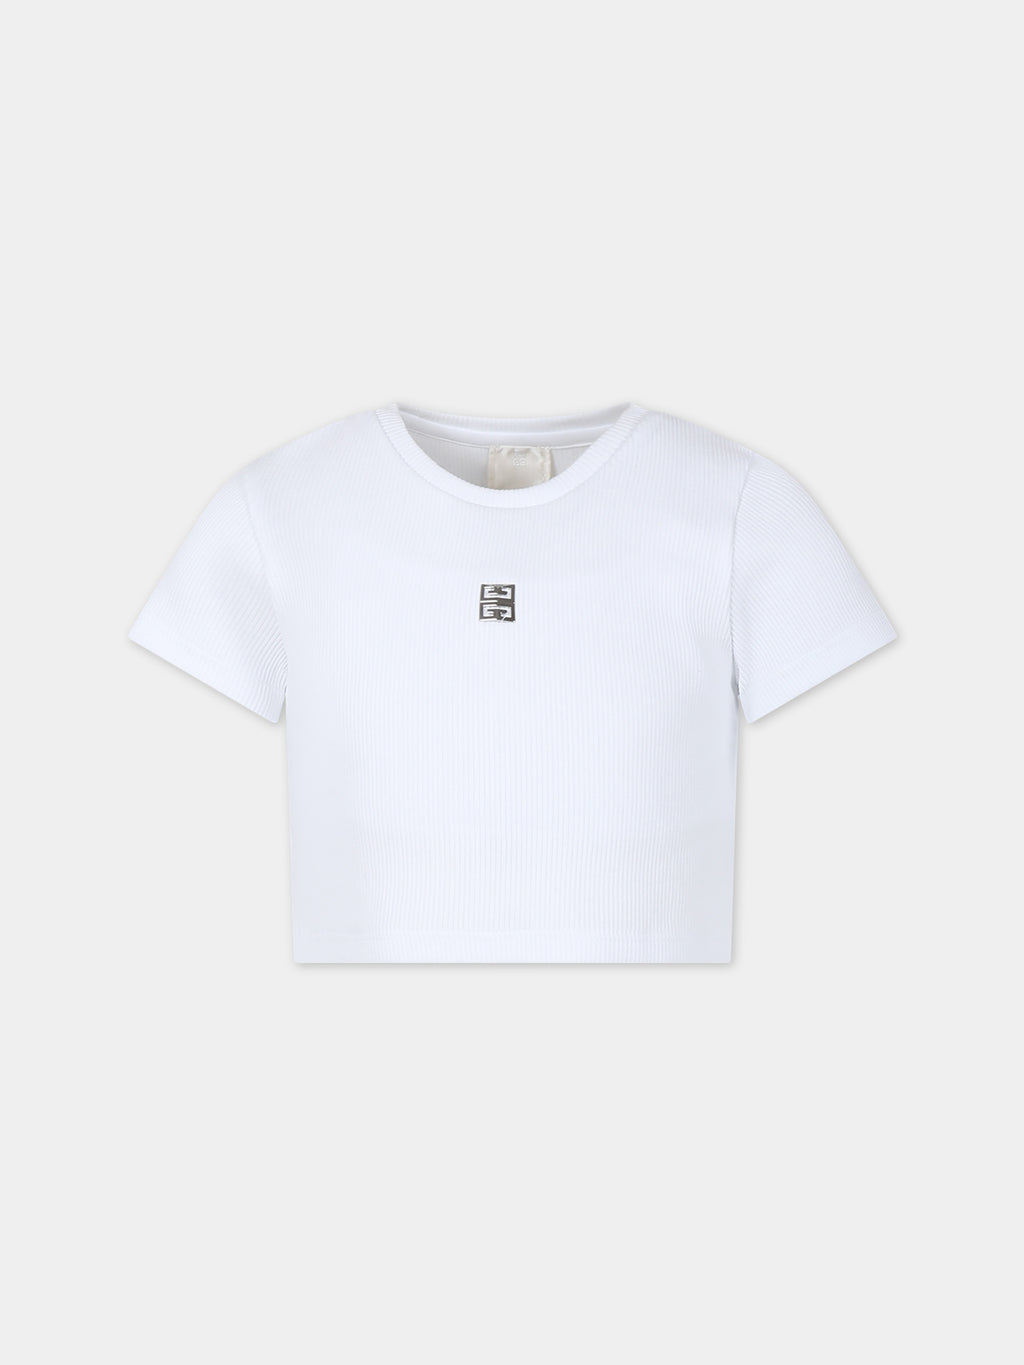 T-shirt bianca per bambina con motivo 4G